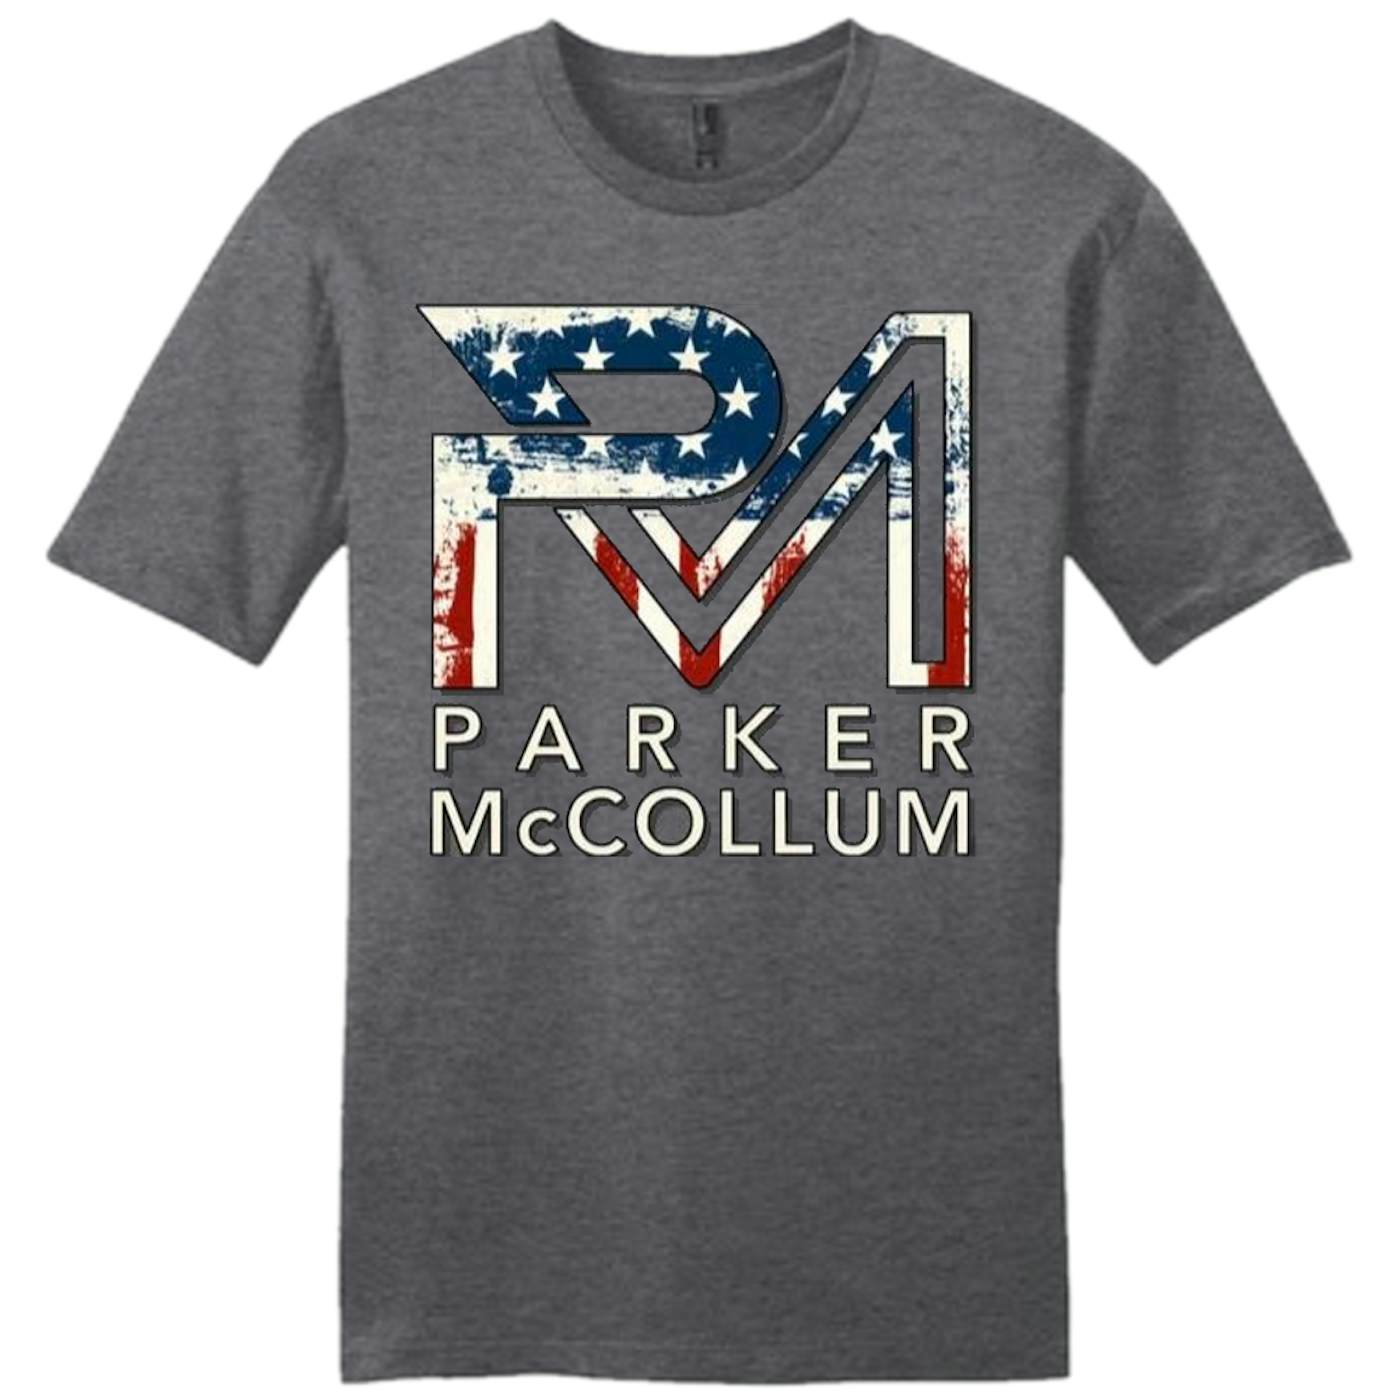 Parker McCollum Flag Logo Tour Tee $35.00